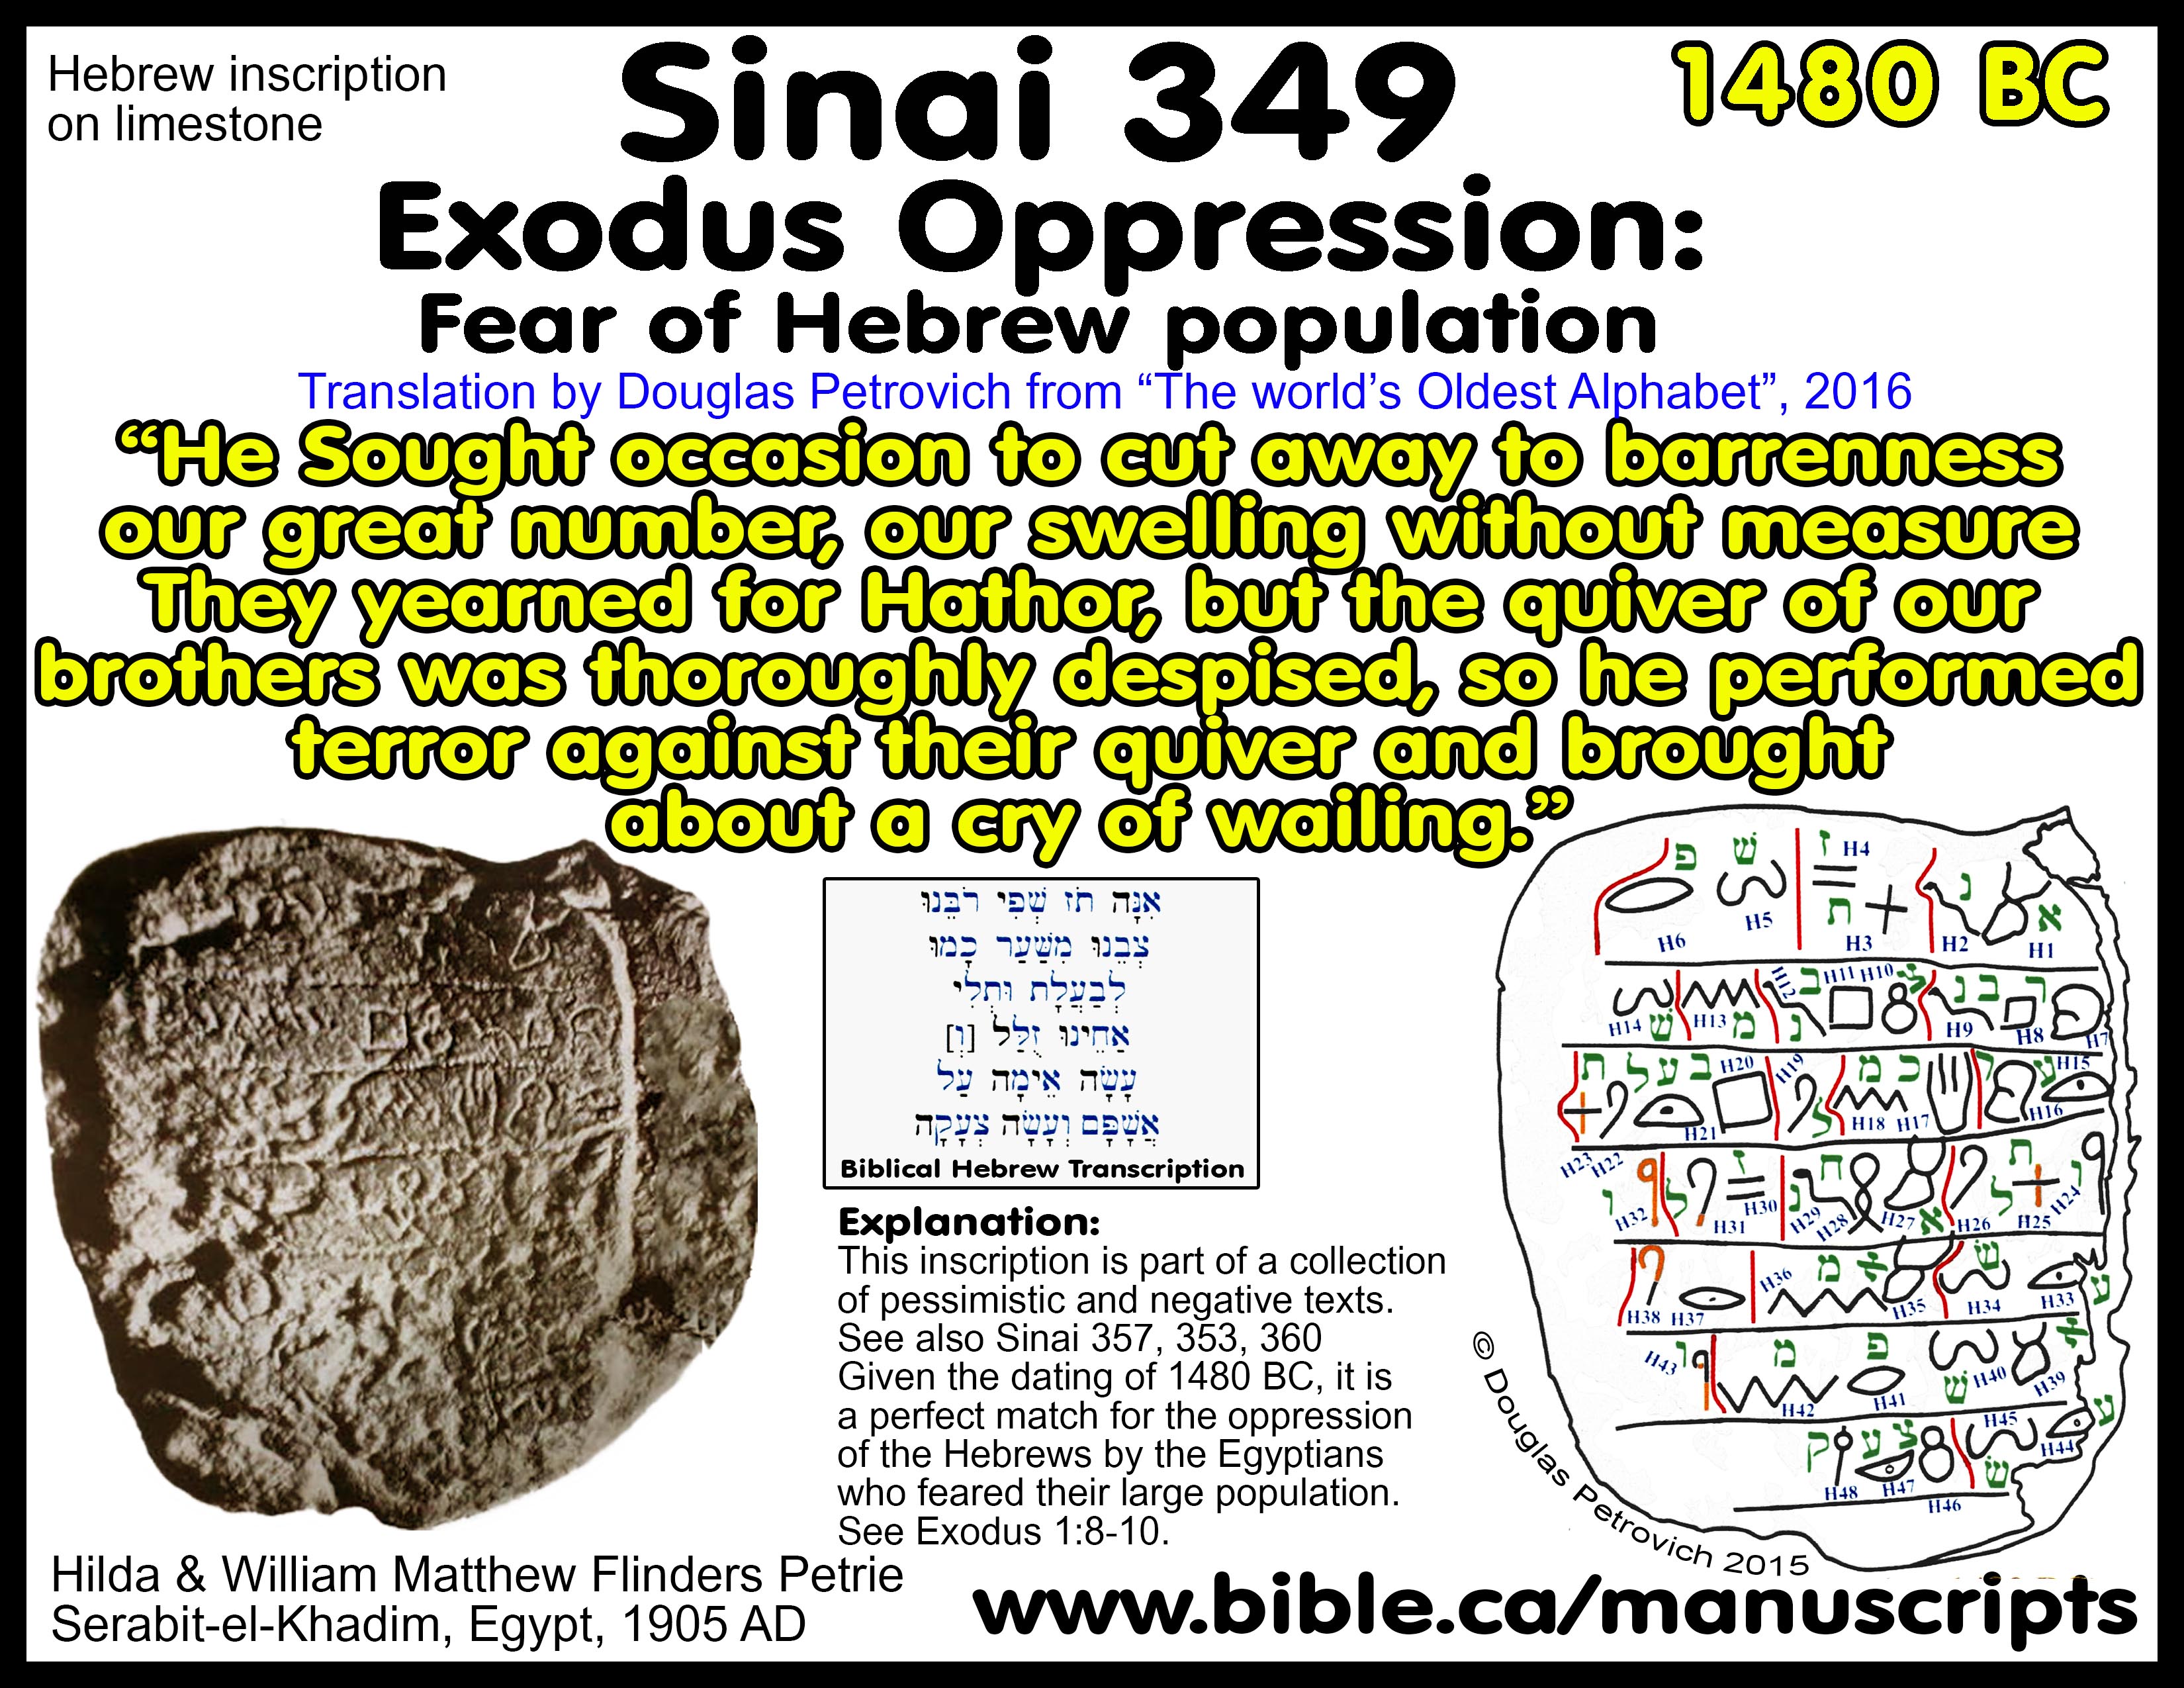 bible-inscriptions-archeology-Hebrew-Sinai-349-turquoise-mine-Serabit-el-Khadim-Exodus-oppression-Exodus1-8-Egyptians-feared-population-growth-multiplied-Douglas-Petrovich-1480bc.jpg